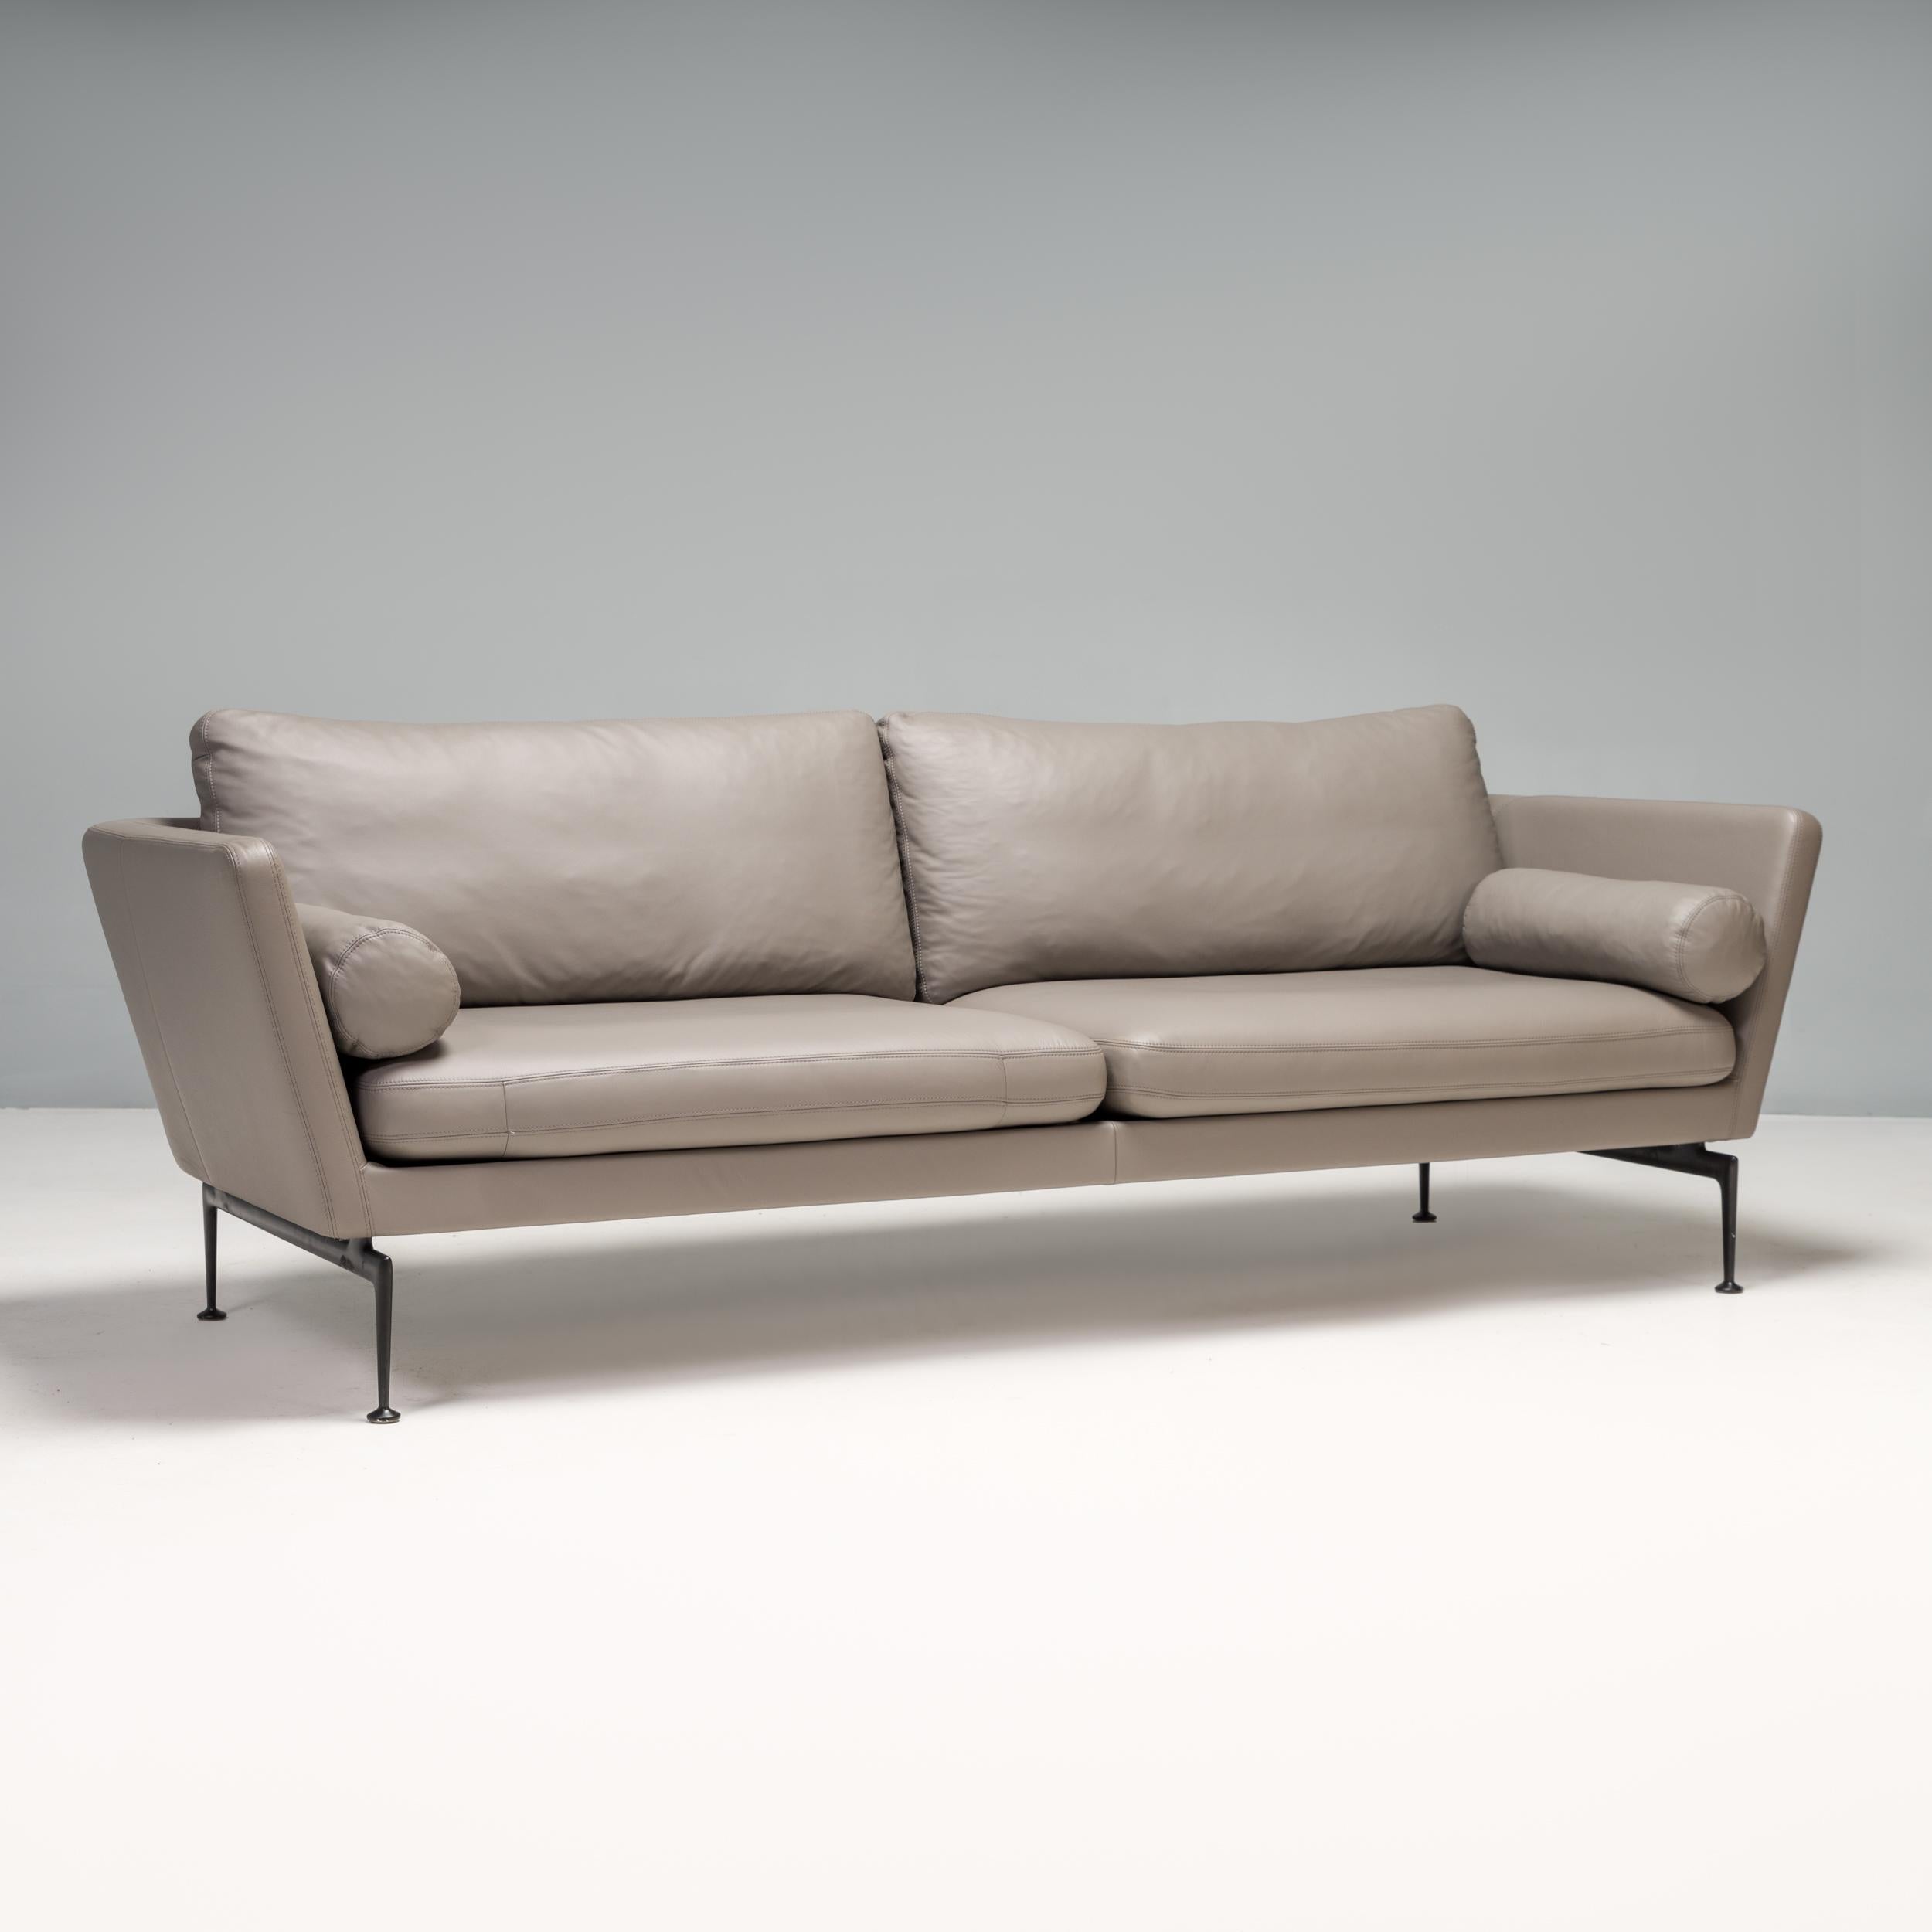 German Antonio Citterio for Vitra Grey Leather Suita Three-Seat Sofa, 2021 For Sale